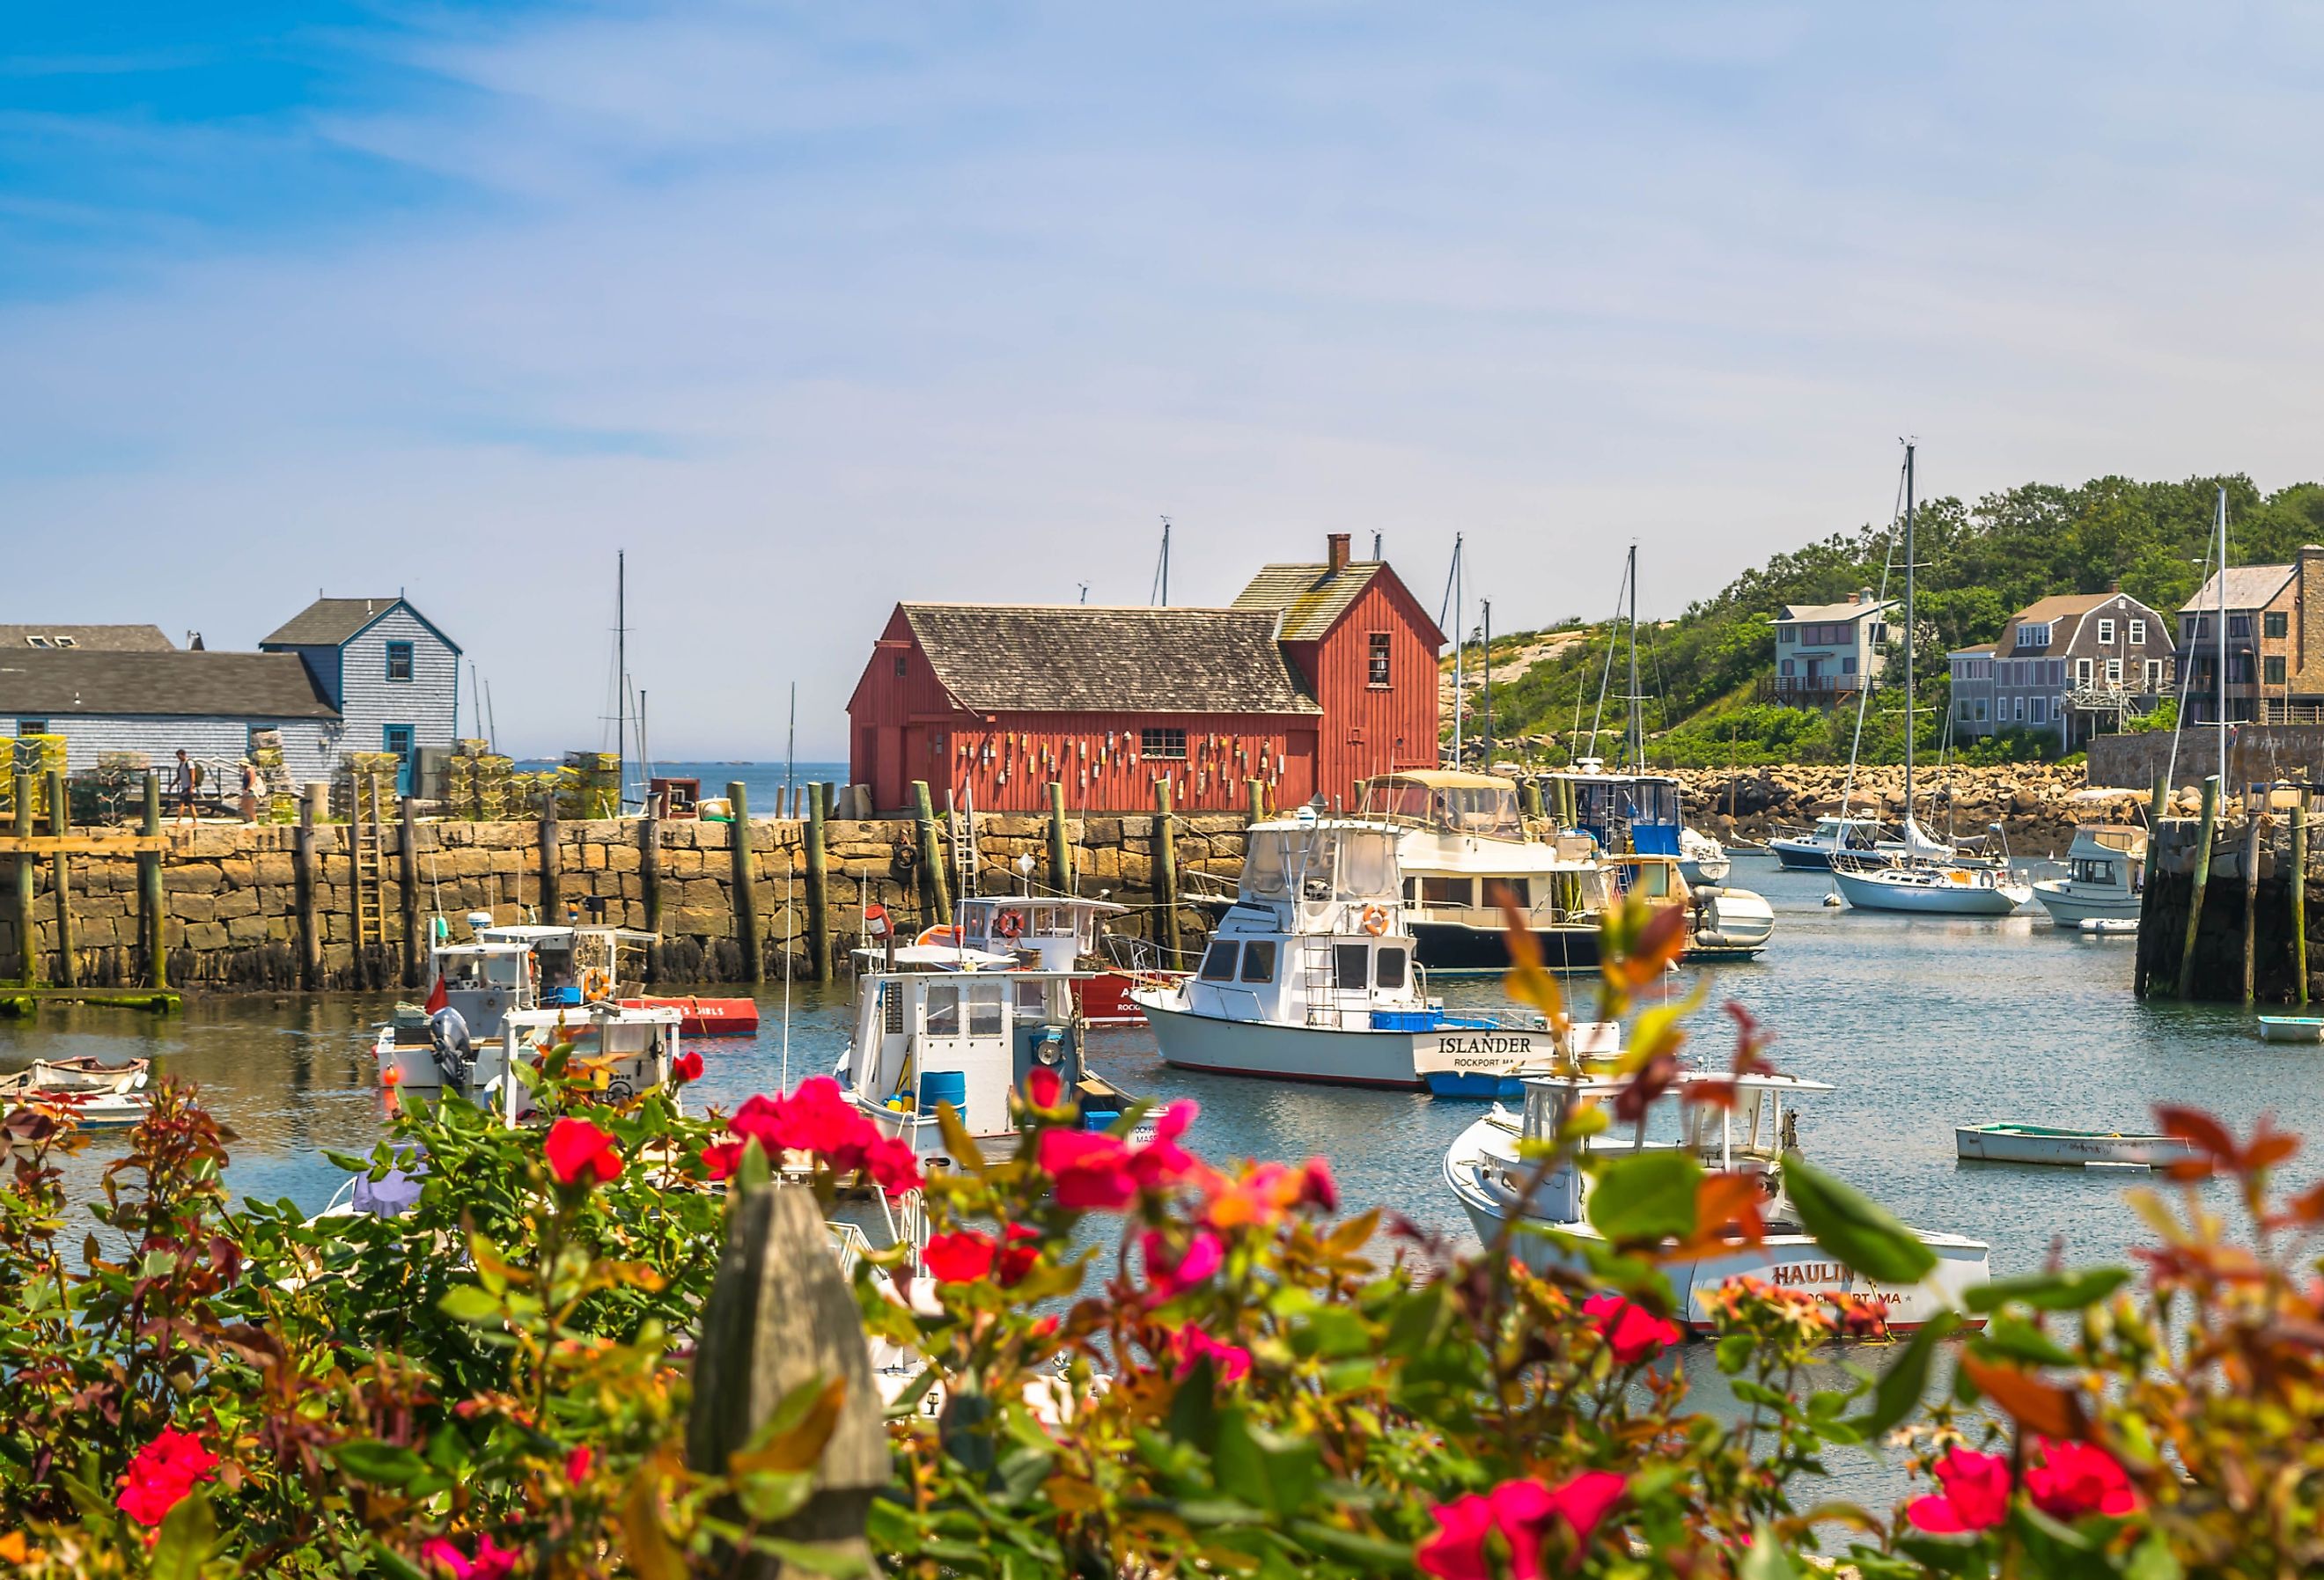 Rockport, Massachusetts. Image credit Keith J Finks via Shutterstock